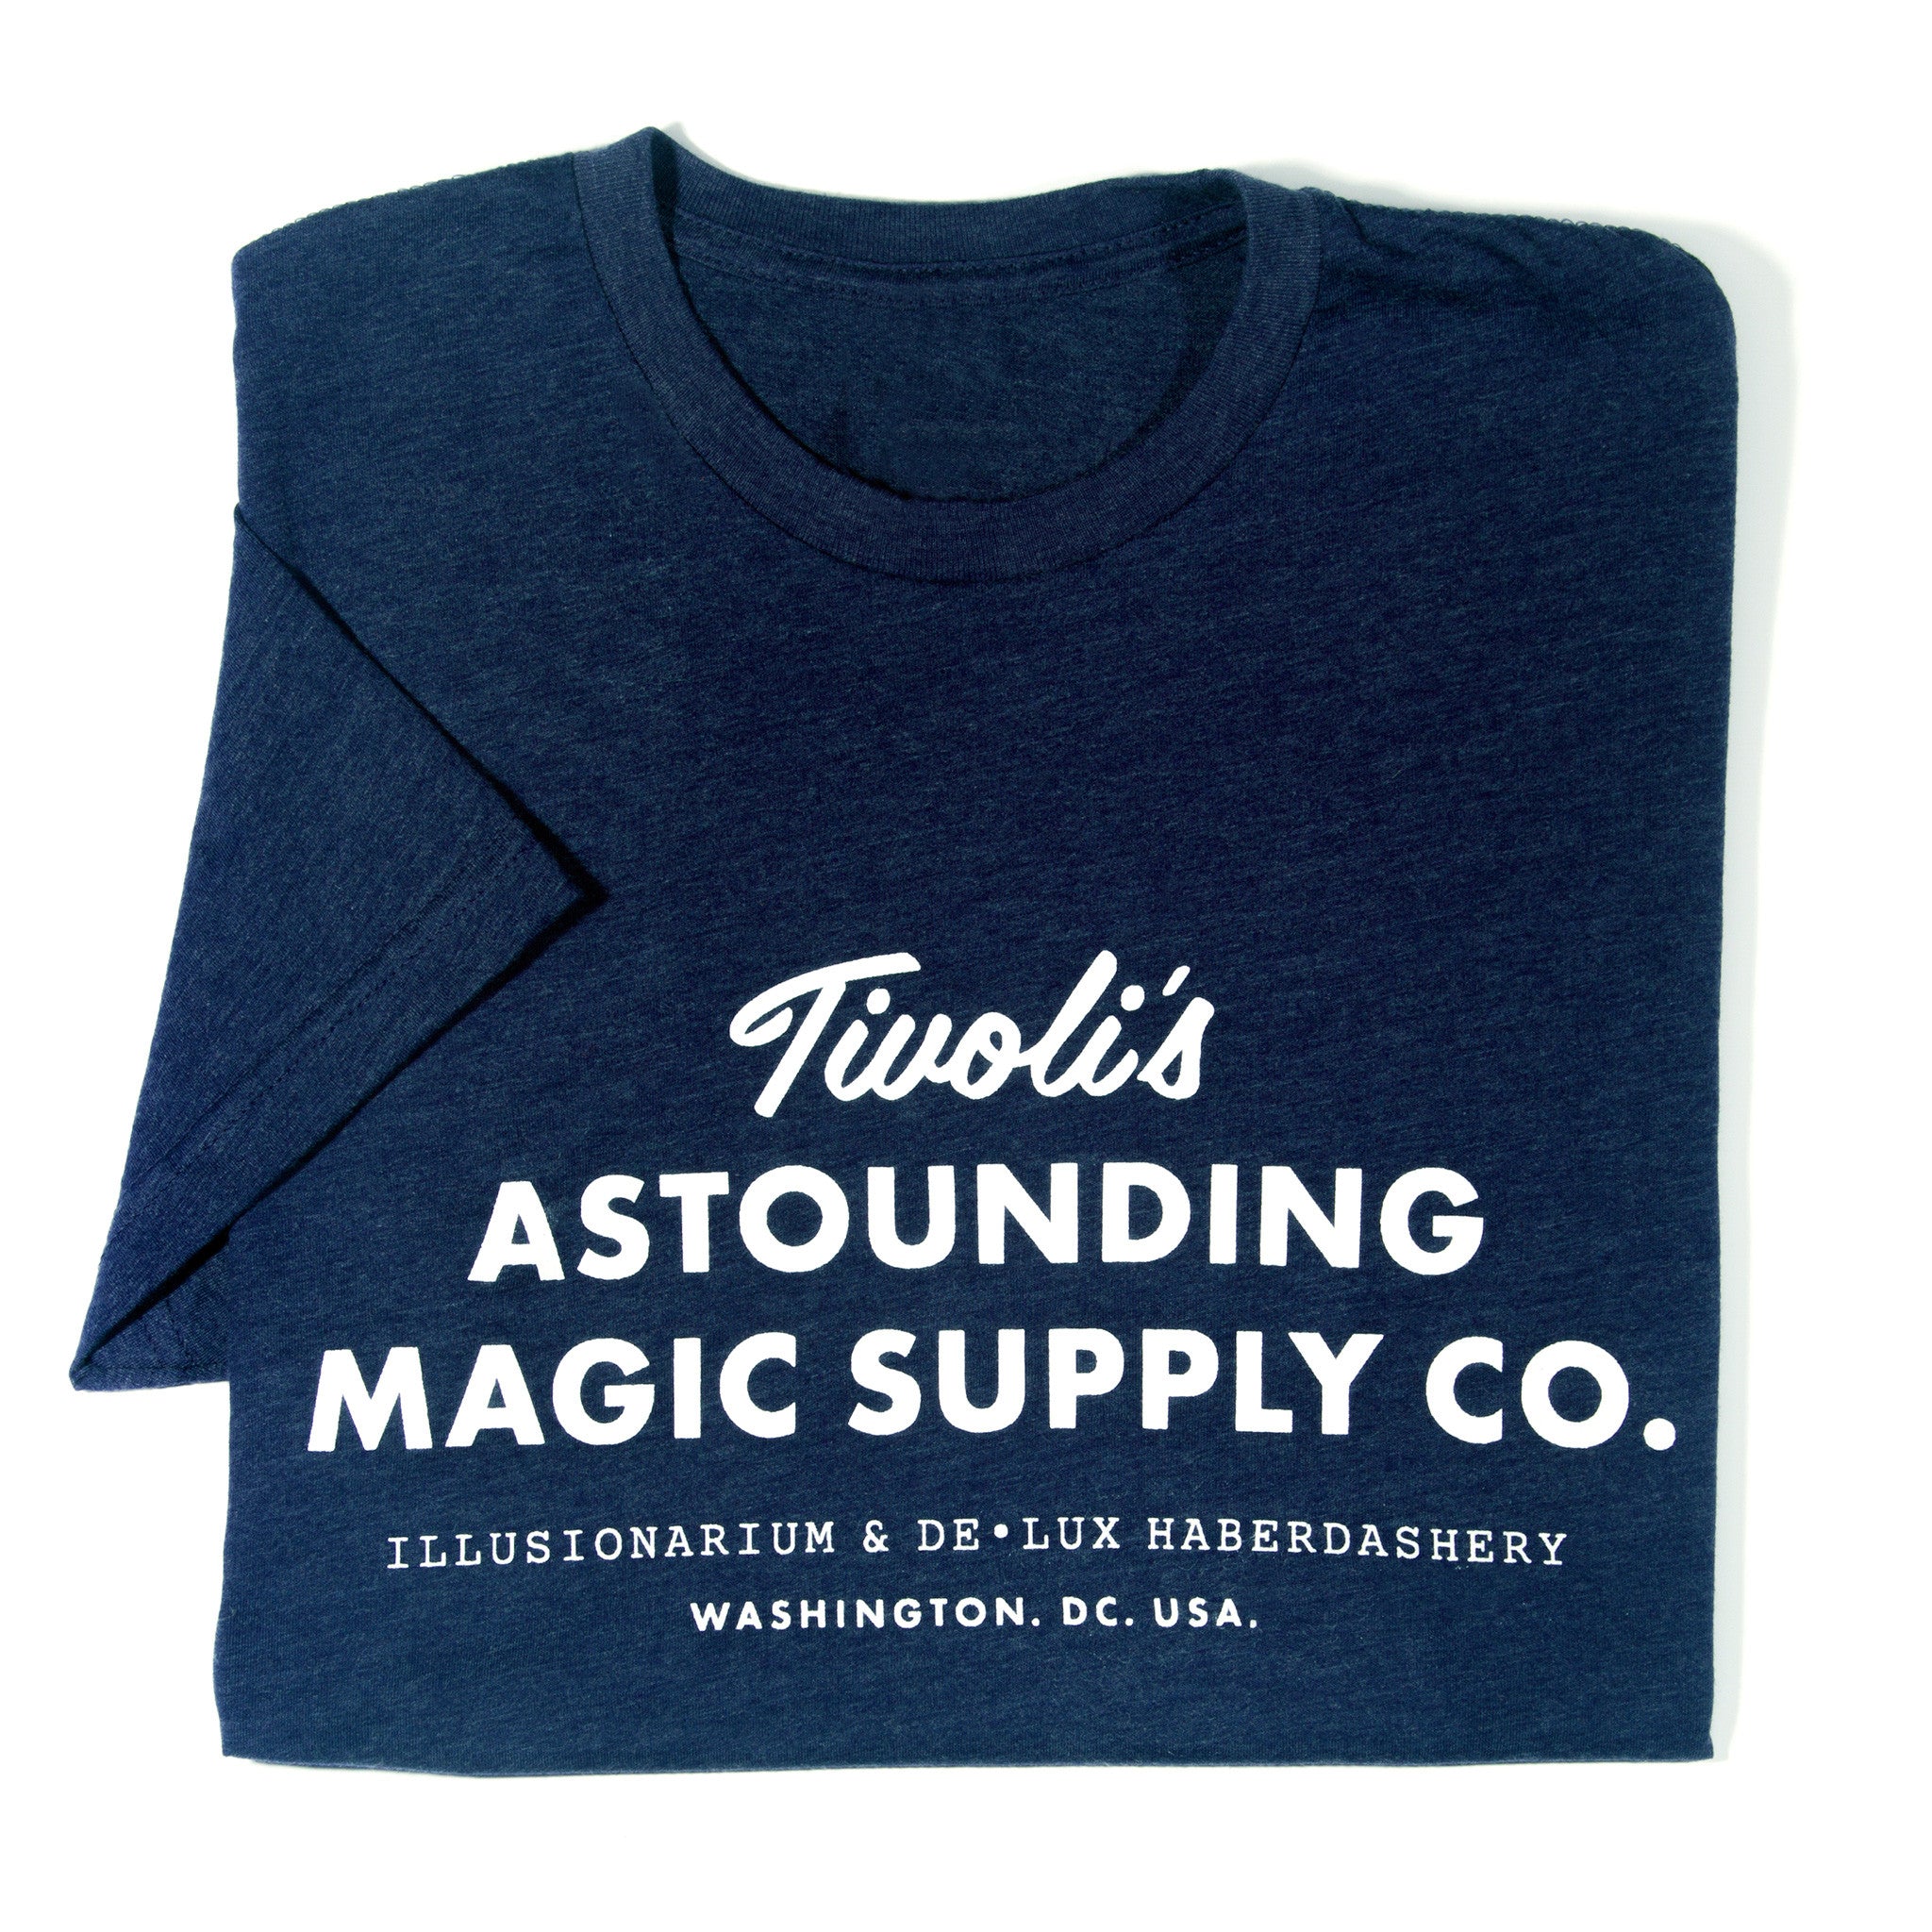 Navy blue shirt with Tivoli's Astounding Magic Supply Co. logo in white.